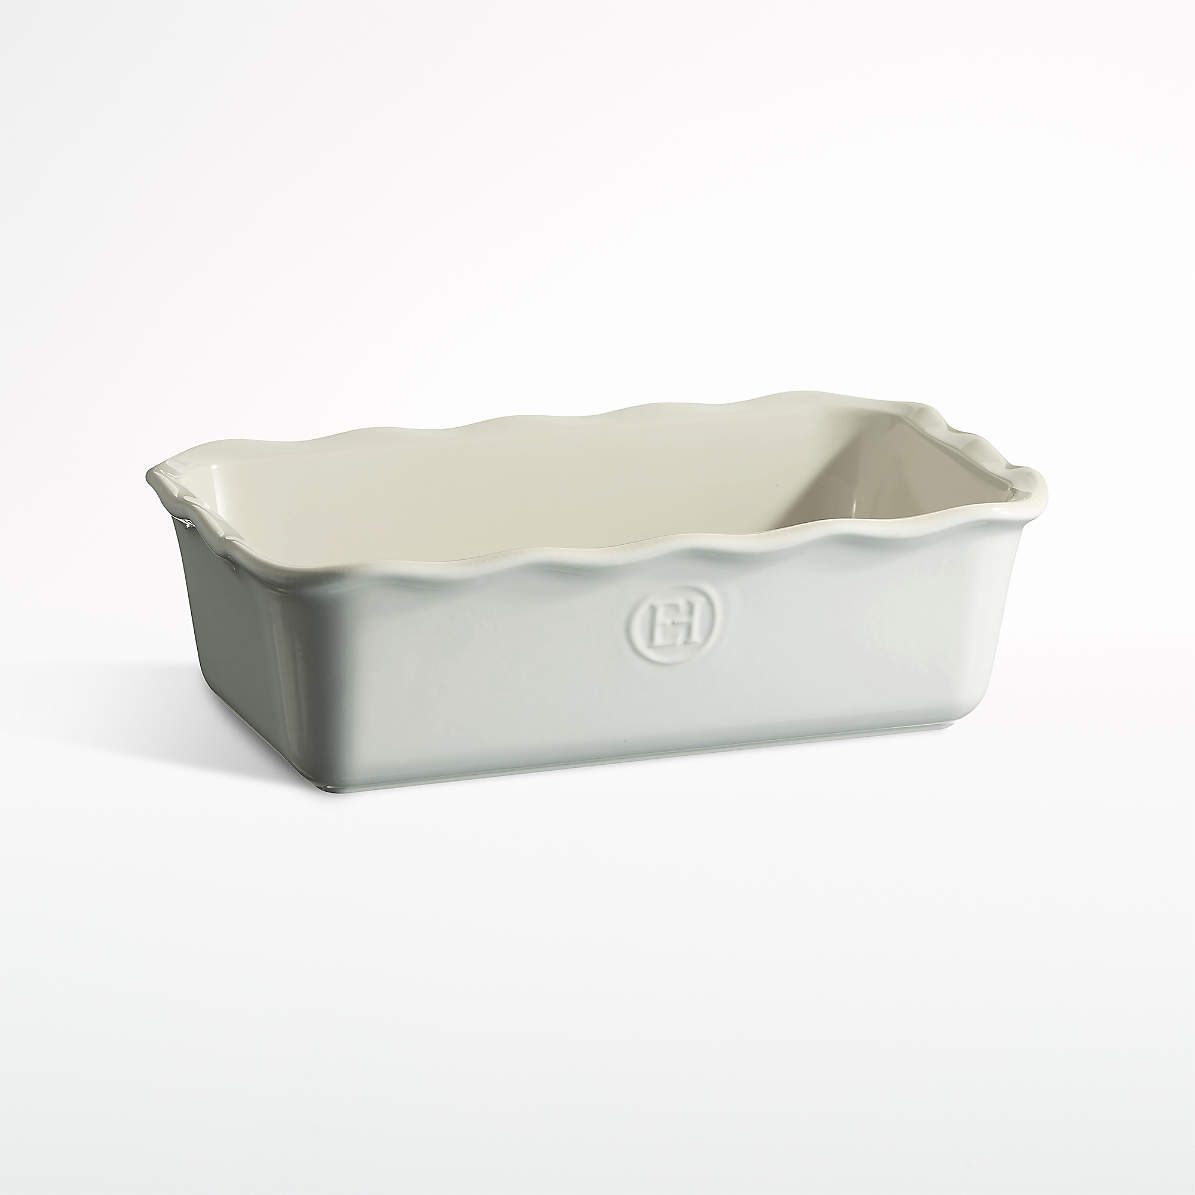 Emile Henry x Crate & Barrel 9x13 Green Ceramic Baking Dish